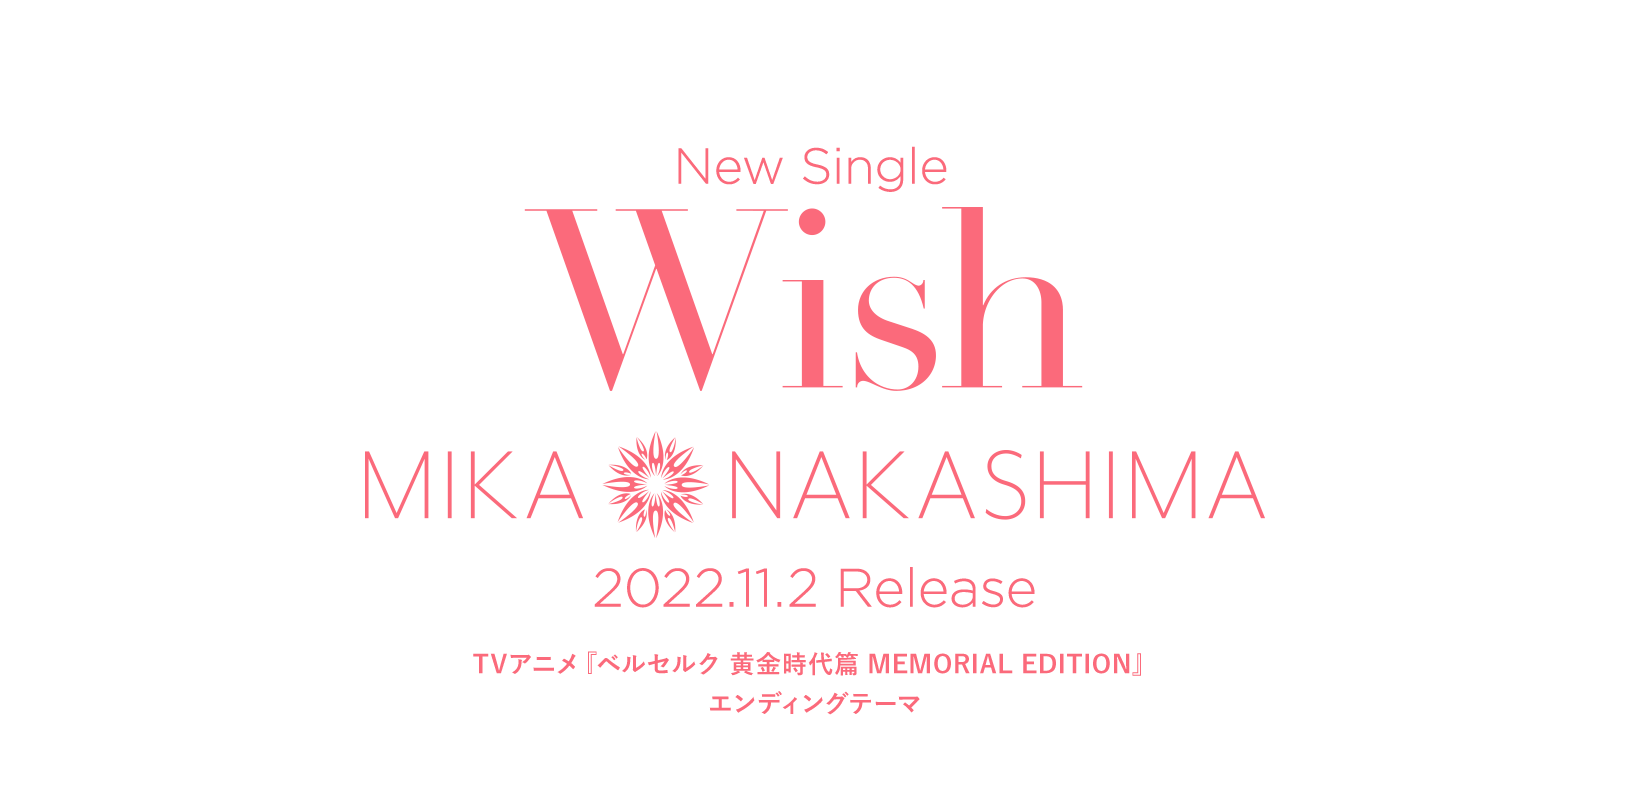 New Single「Wish」2022.11.2 Release